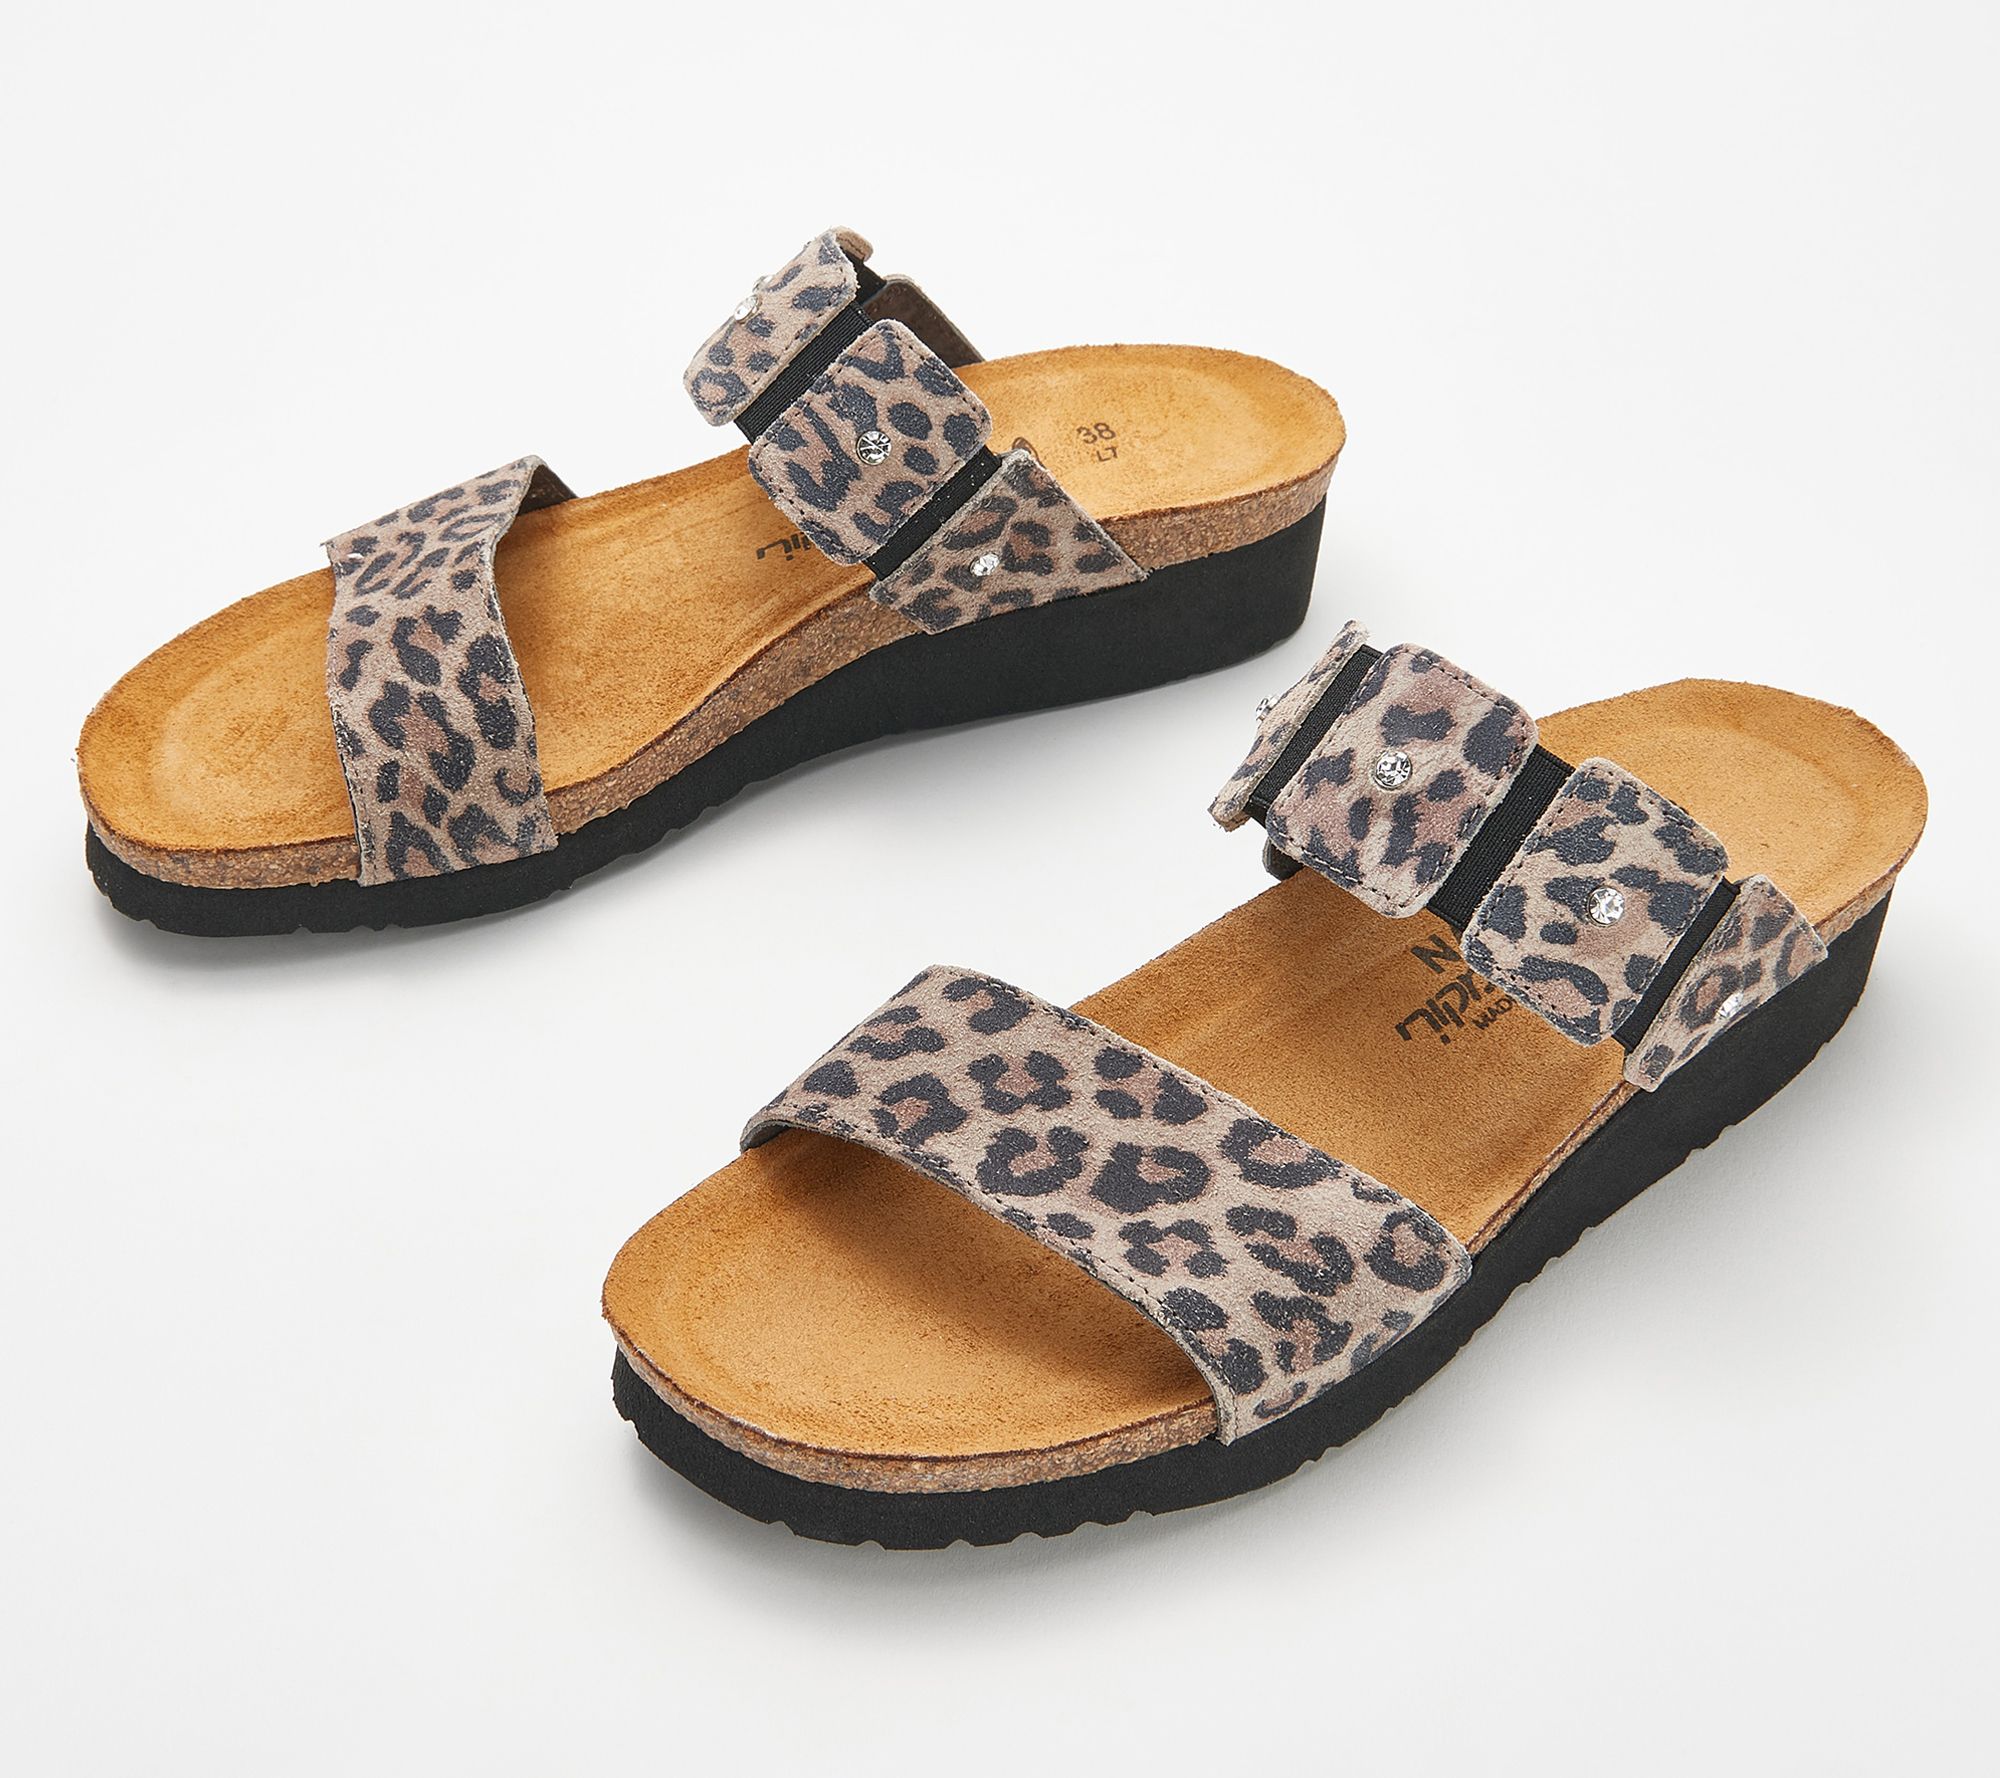 Naot Leather Wedge Slide Sandals - Ashley - QVC.com